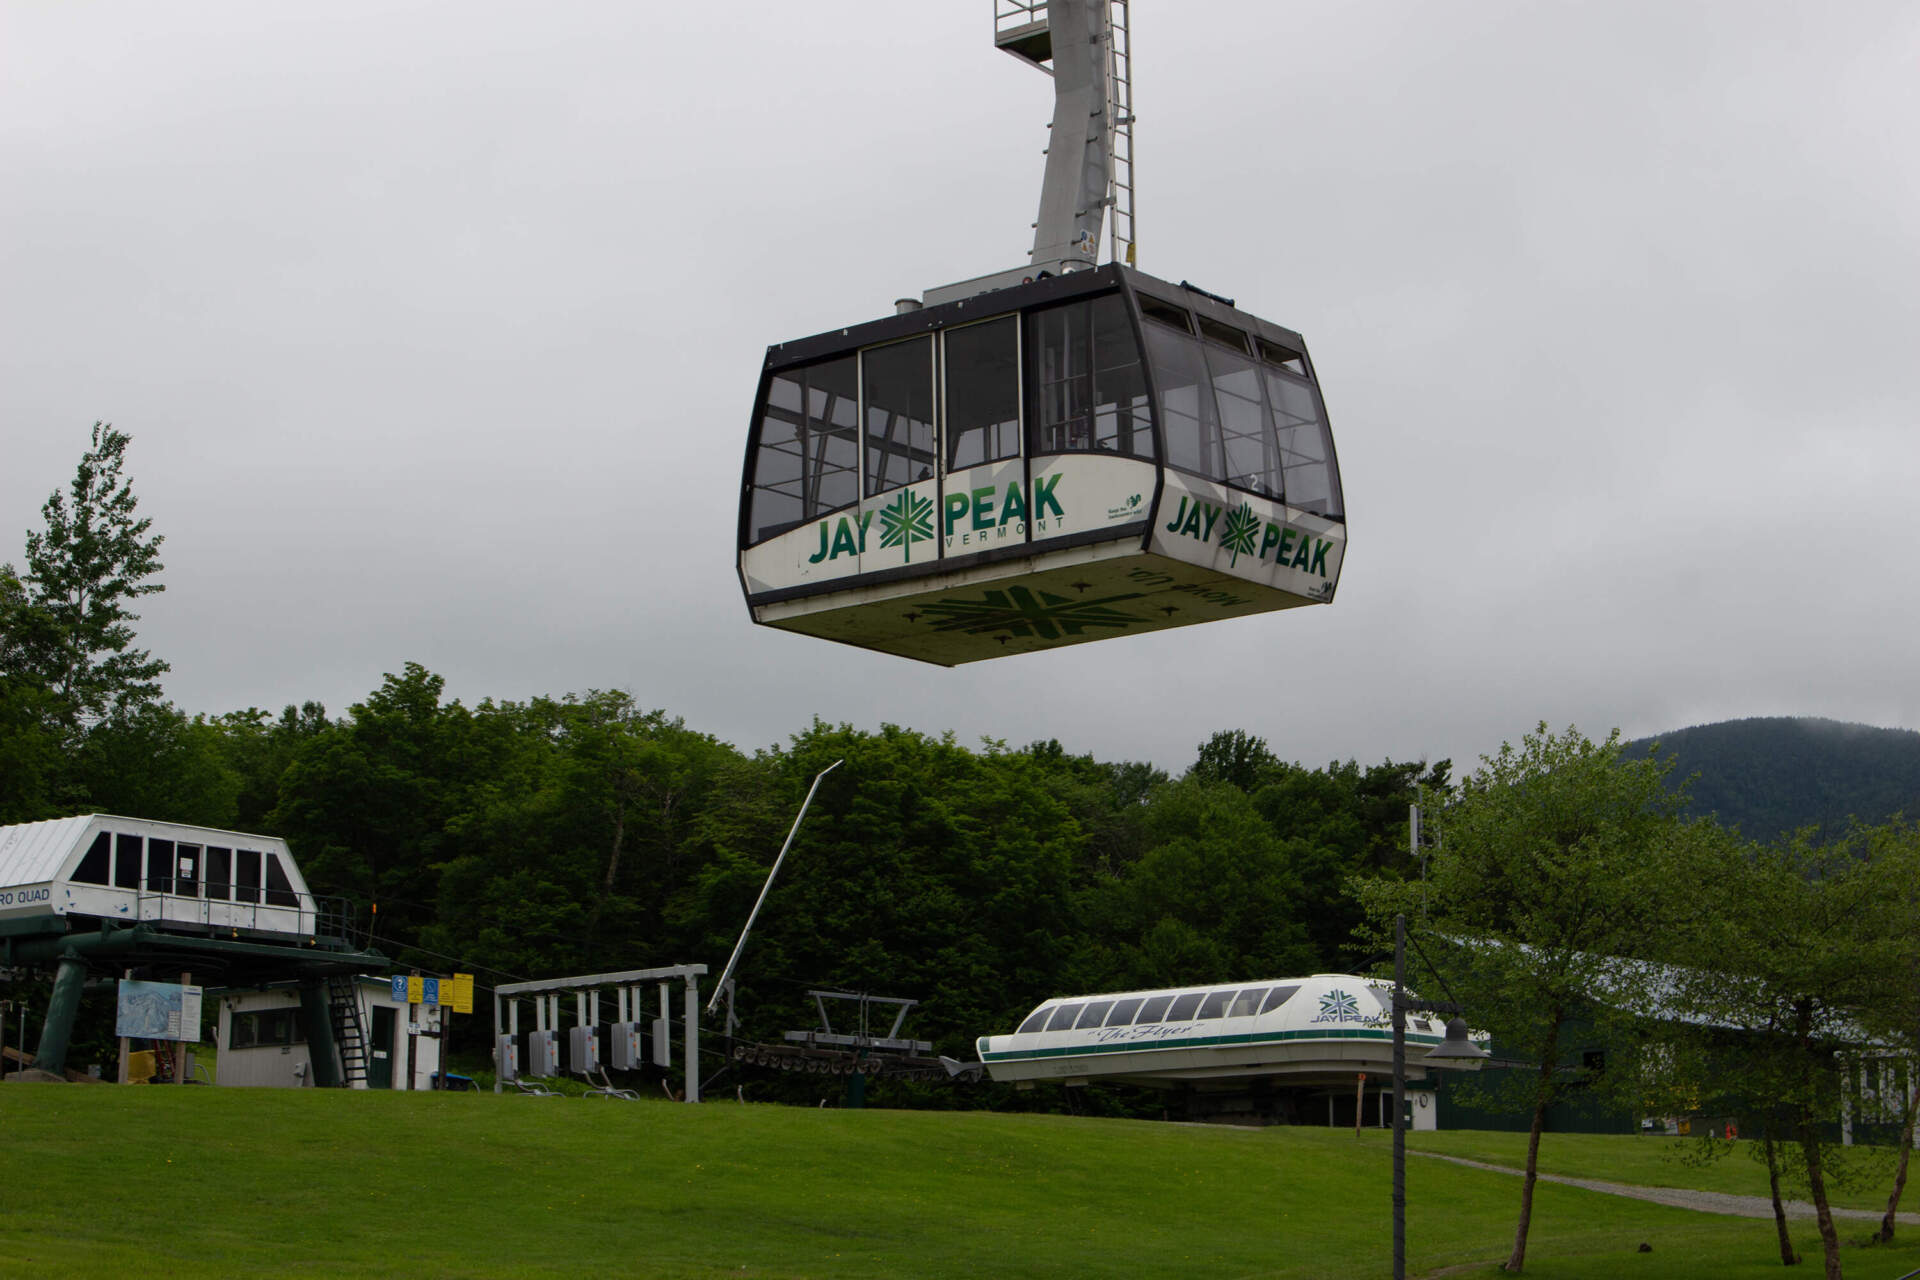 The Jay Peak Resort aerial tram runs to the top of Jay Peak in Jay, Vermont, on June 12. (Zoe McDonald/Vermont Public)